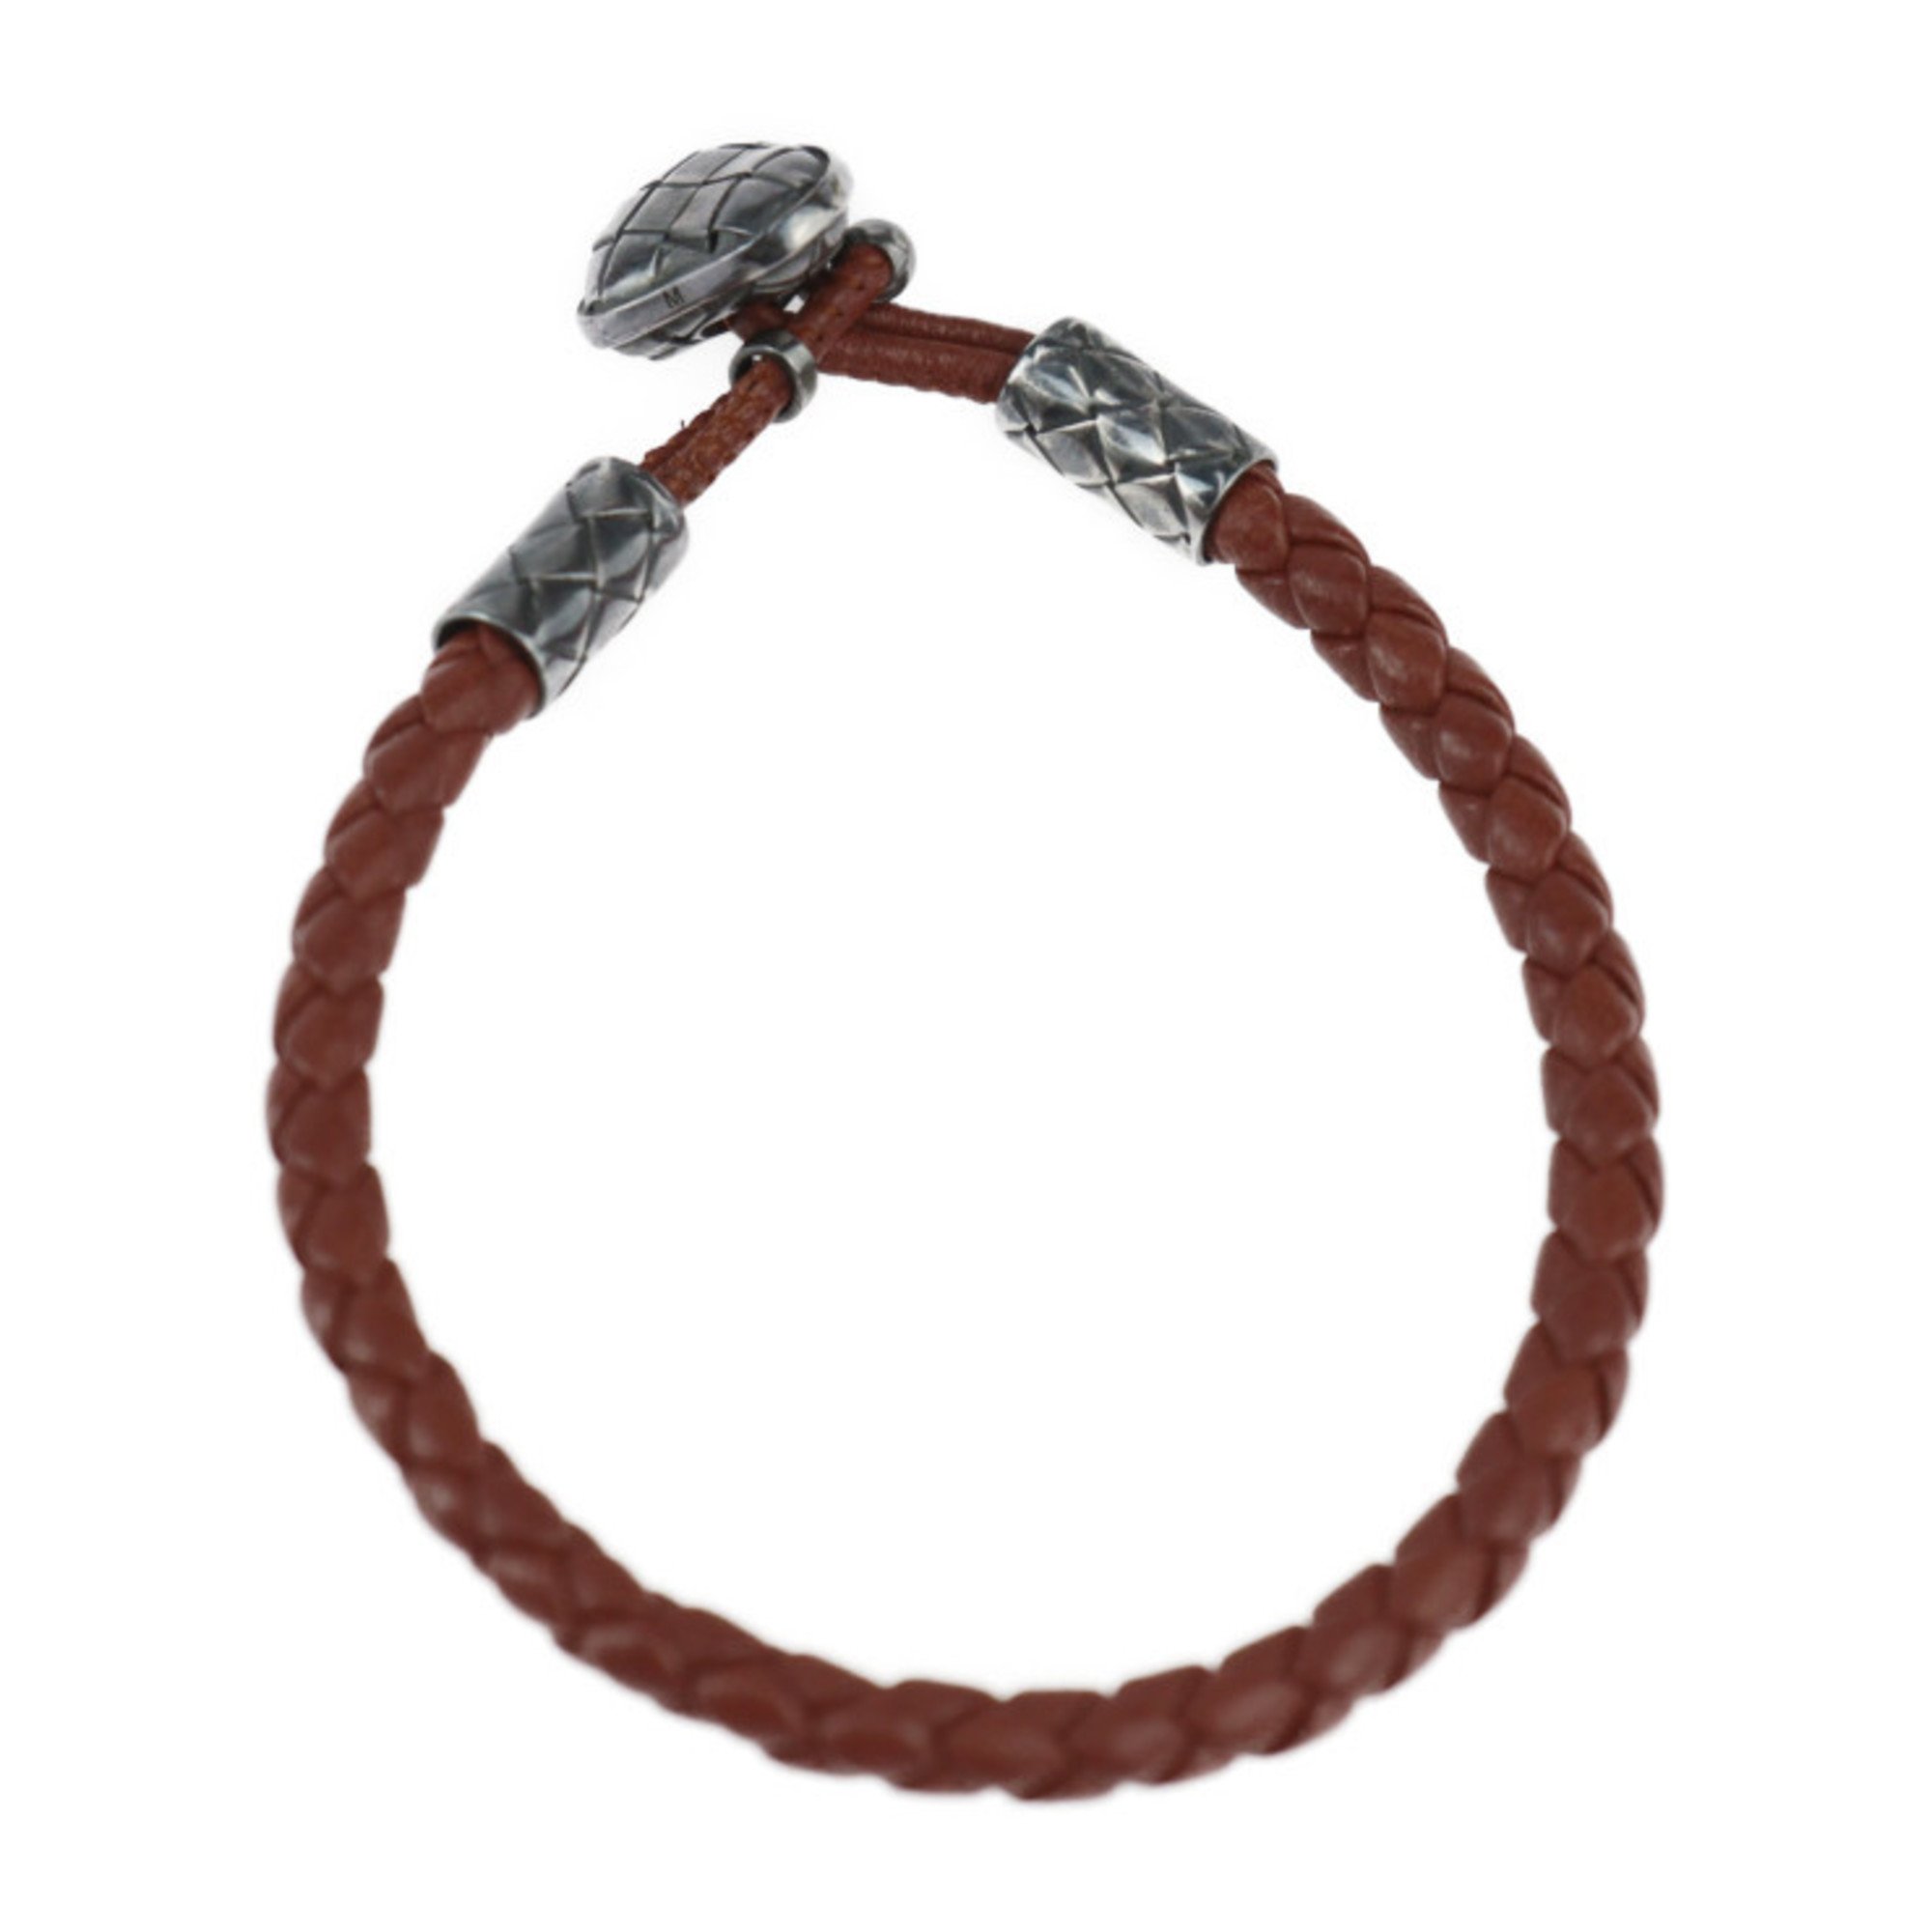 BOTTEGA VENETA Intrecciato Nappa Oxidized Silver Bracelet 323759 Size M Leather Ag925 Brown